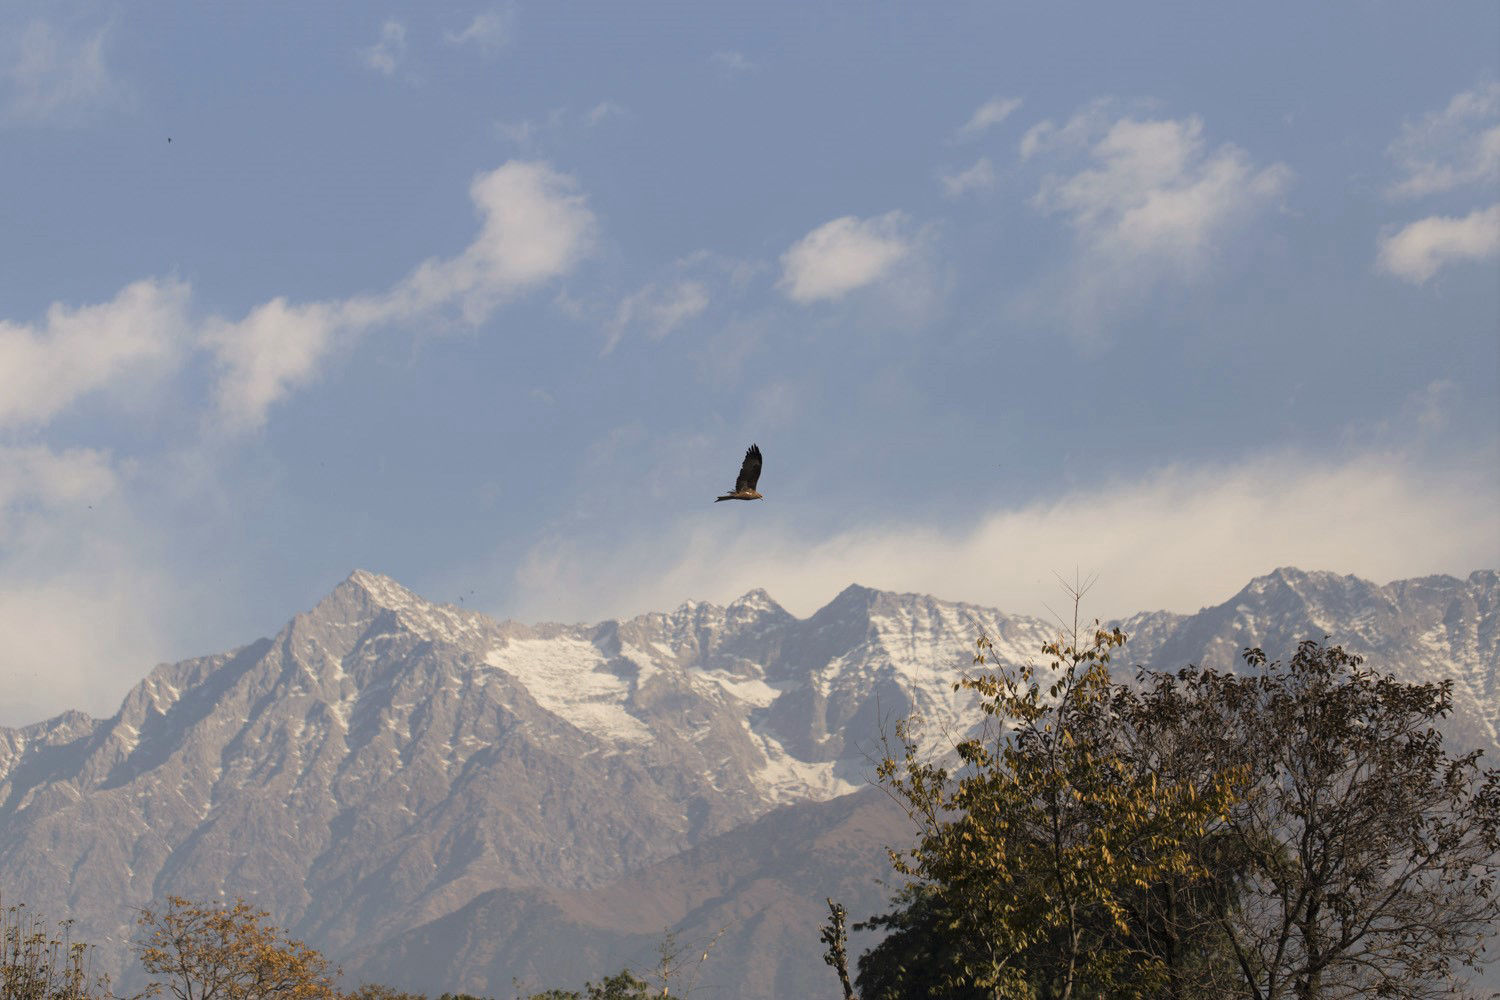 Himalayas in Himachal Pradesh